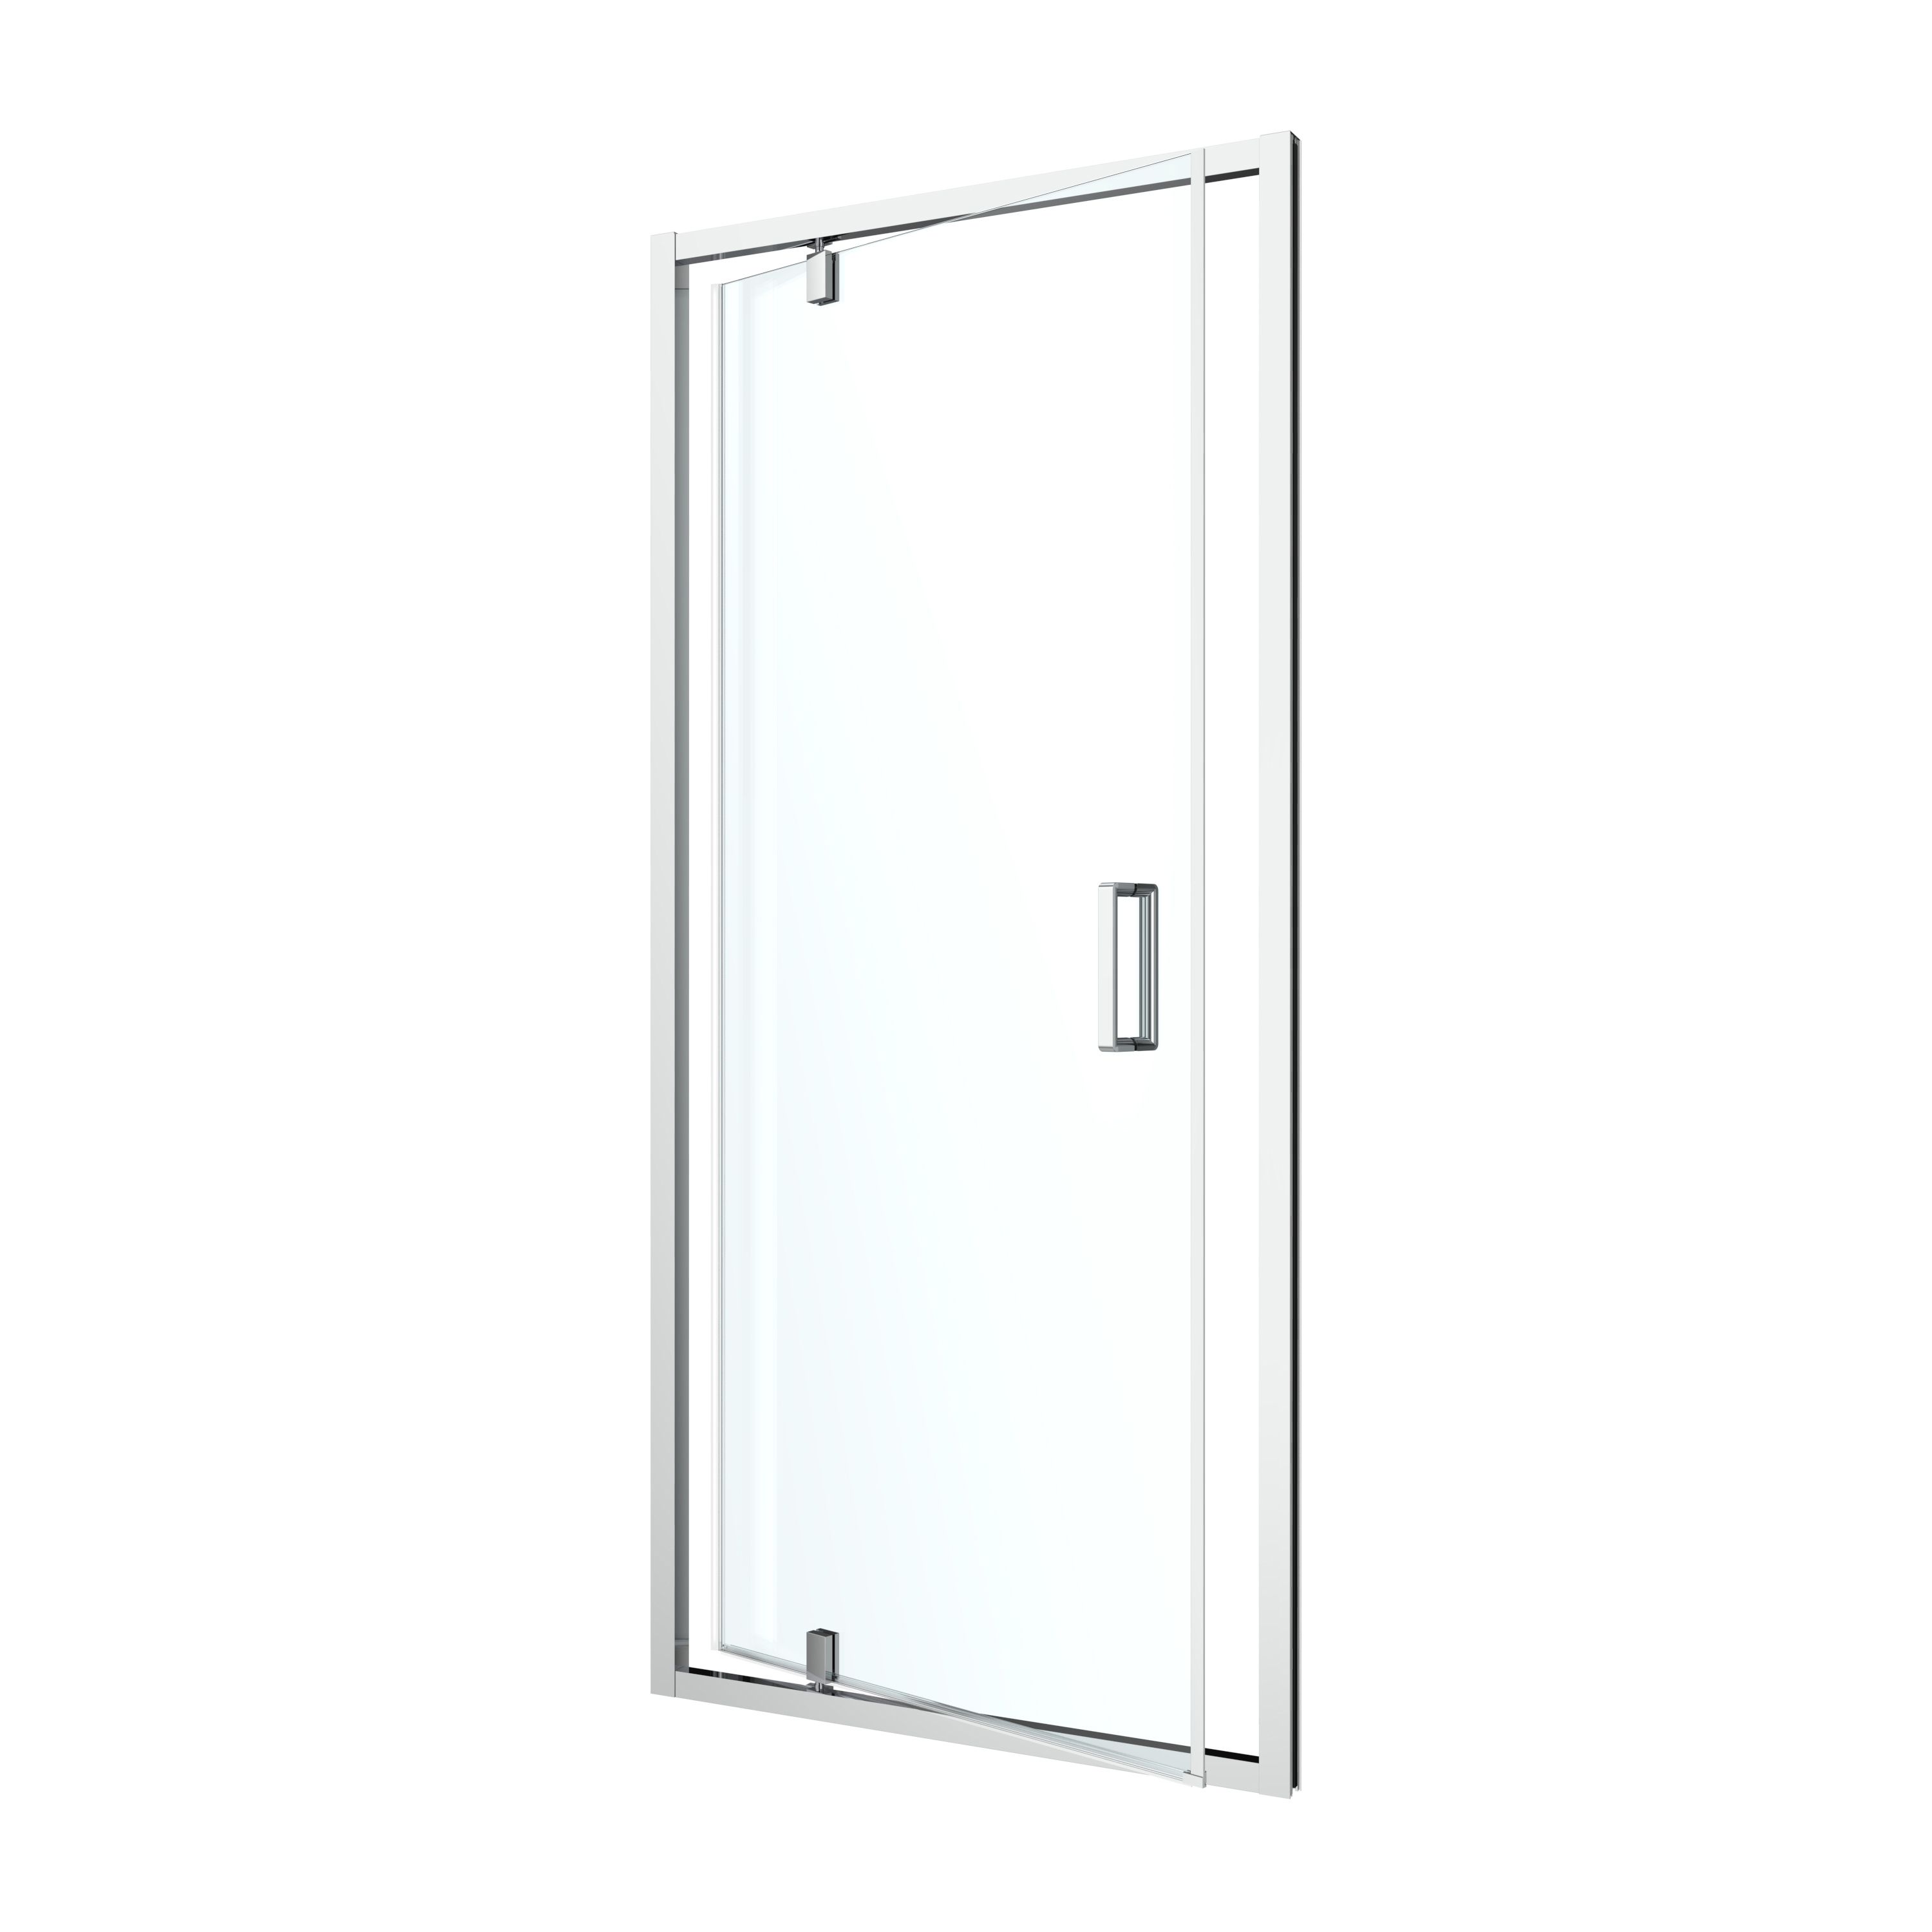 GoodHome Ledava Minimal frame Chrome effect Clear glass Half open pivot Shower Door (H)195cm (W)80cm